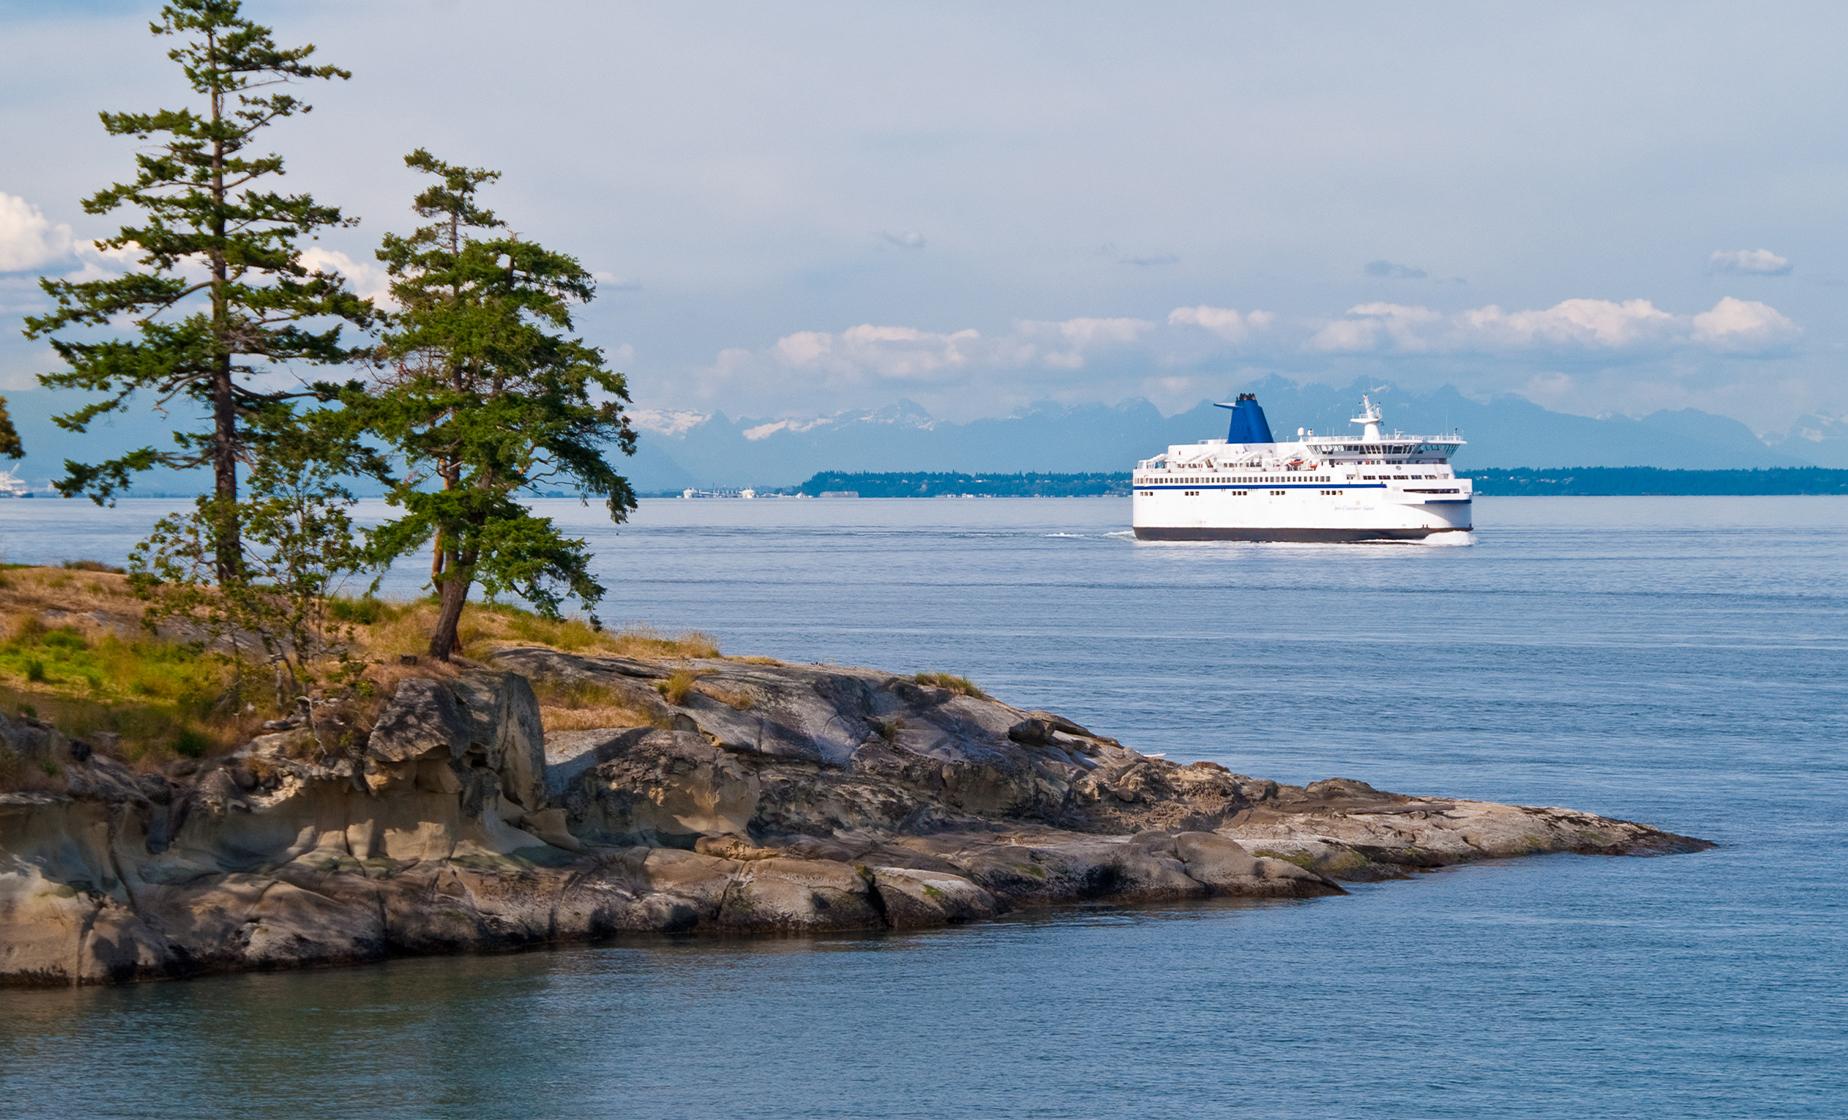 High-Speed Passenger Ferry From Victoria, British Columbia to Seattle, Washington (High Season)